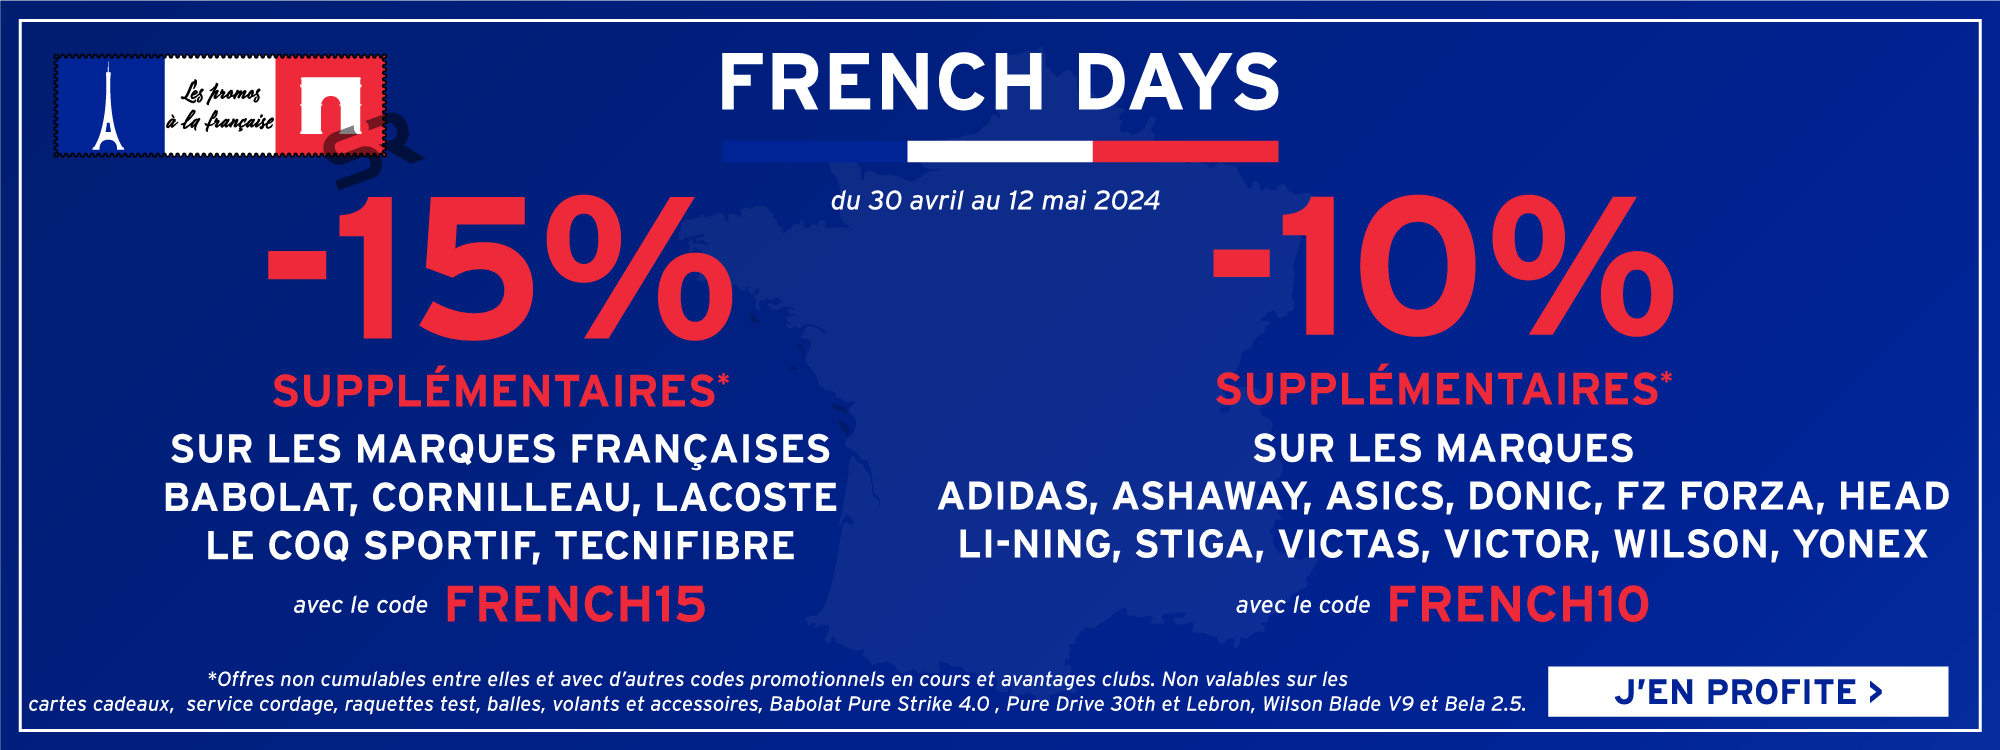 French Days 2024